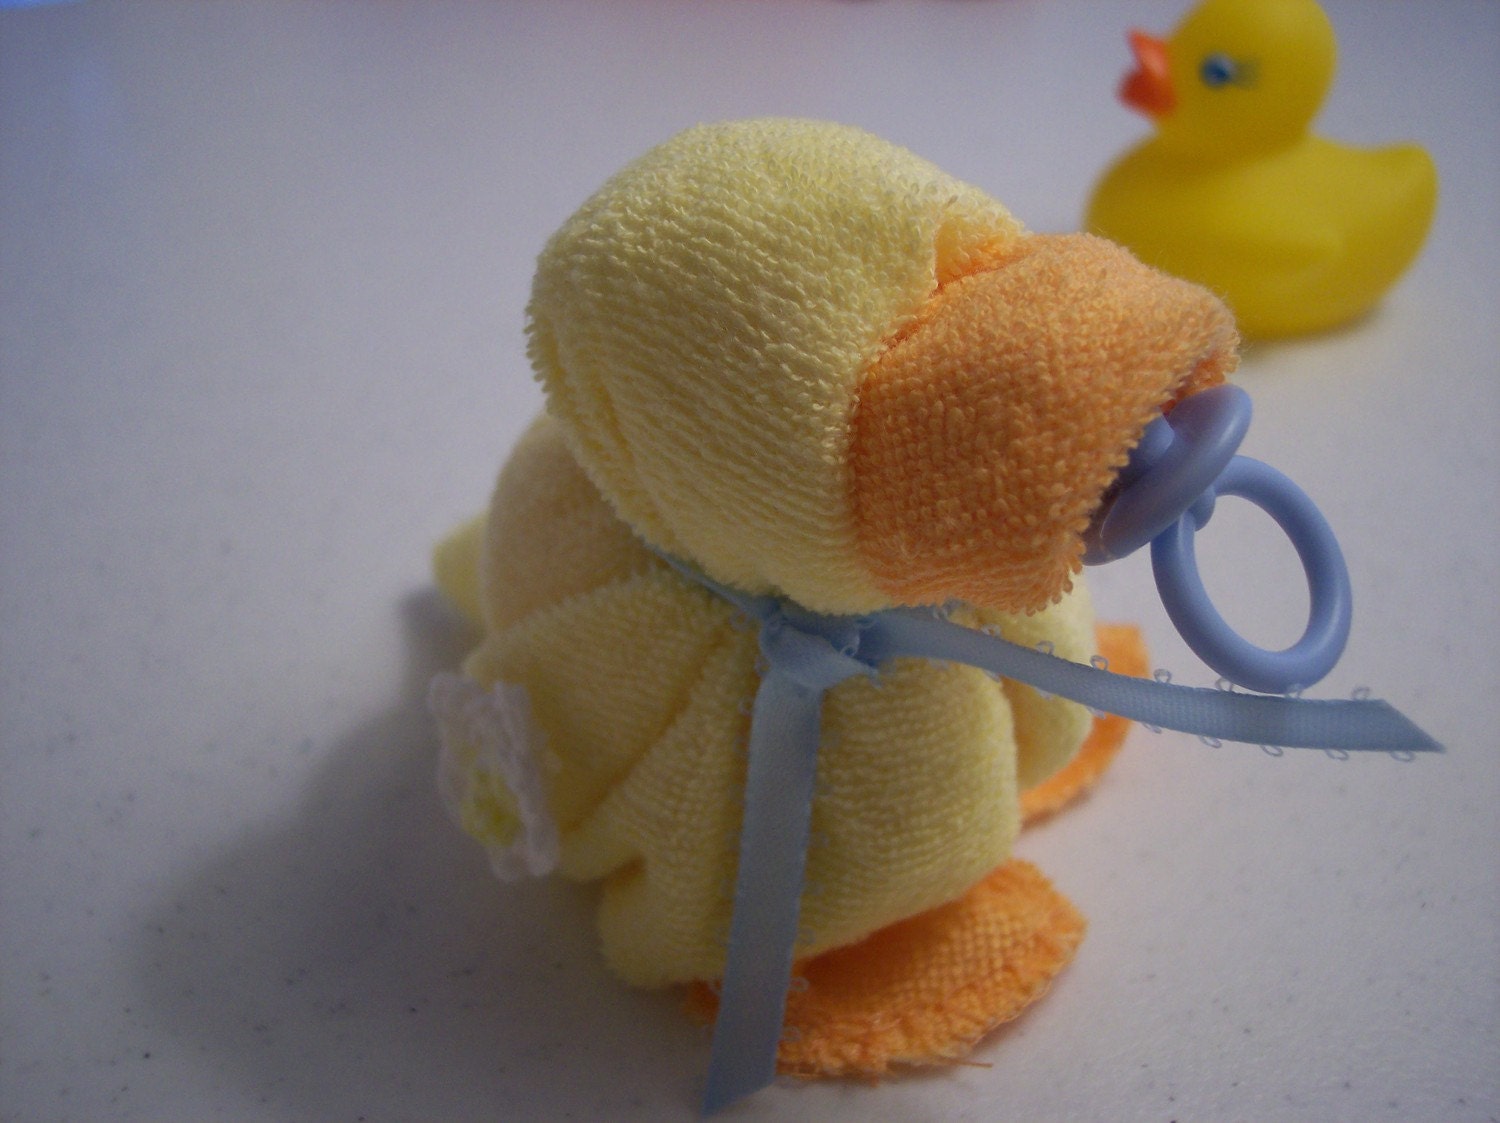 Introducing "Baby Quackers" Washcloth ducks